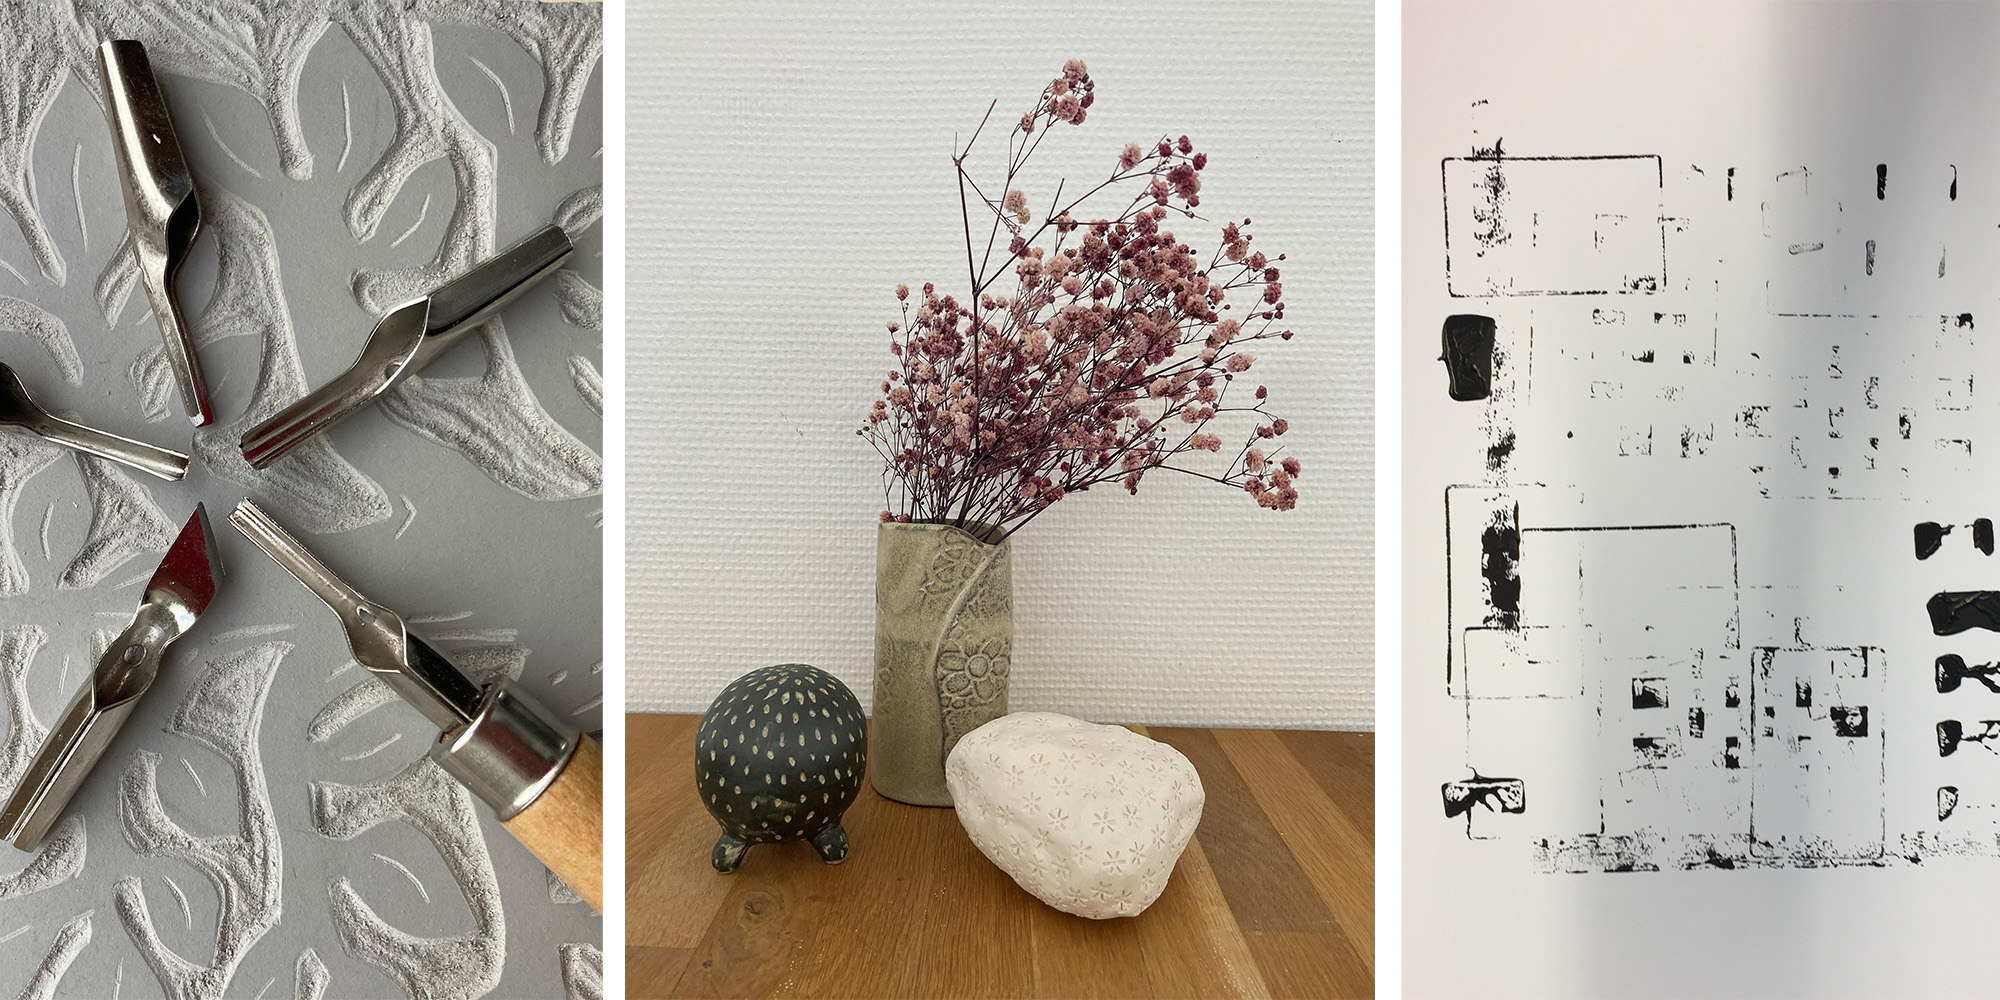 Slip kreativiteten fri - FOF kursus i Arden med lino cut keramik og mono print